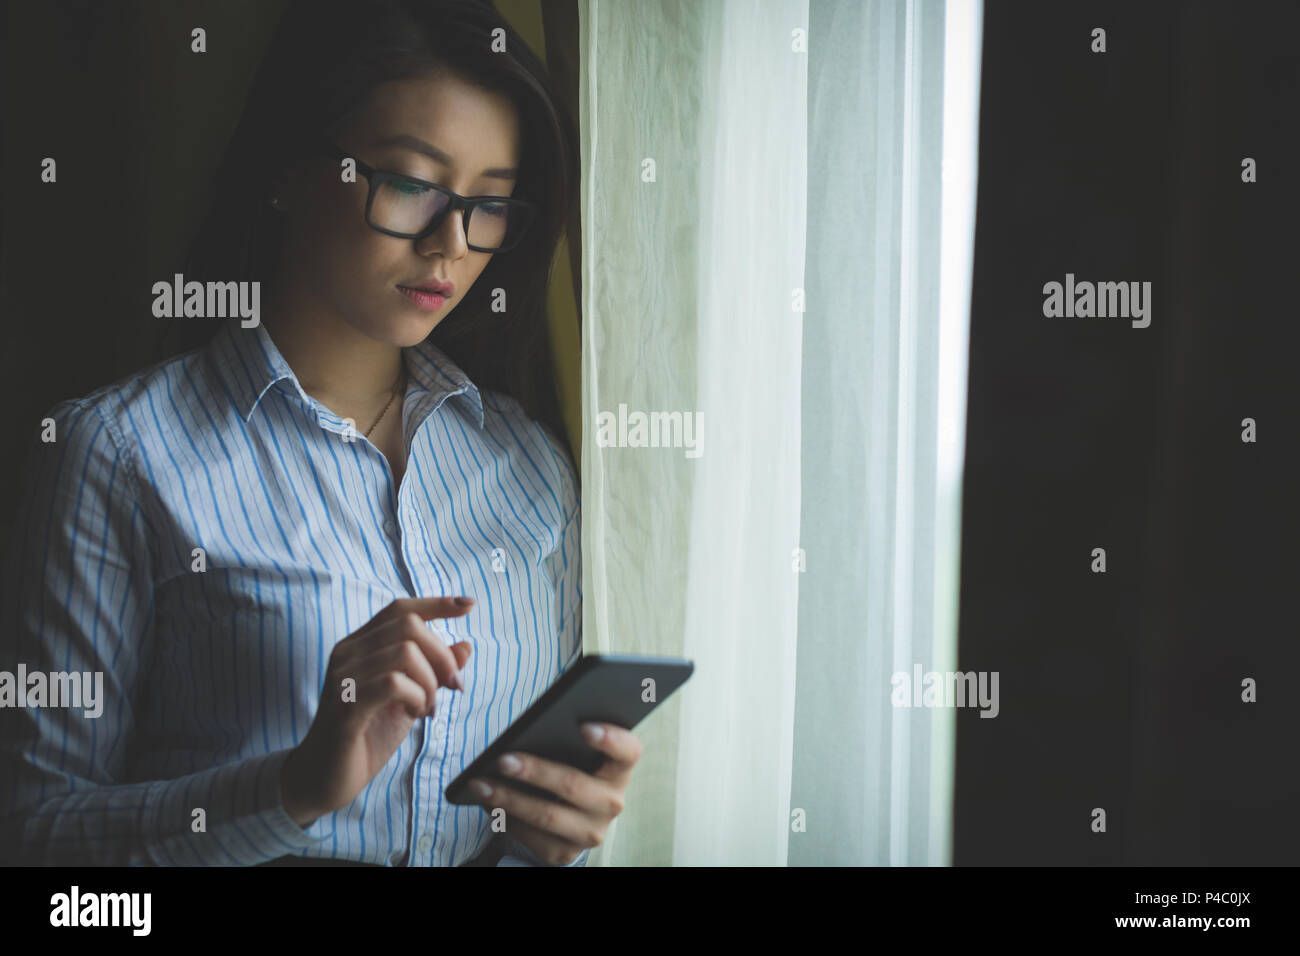 Businesswoman using mobile phone Stock Photo